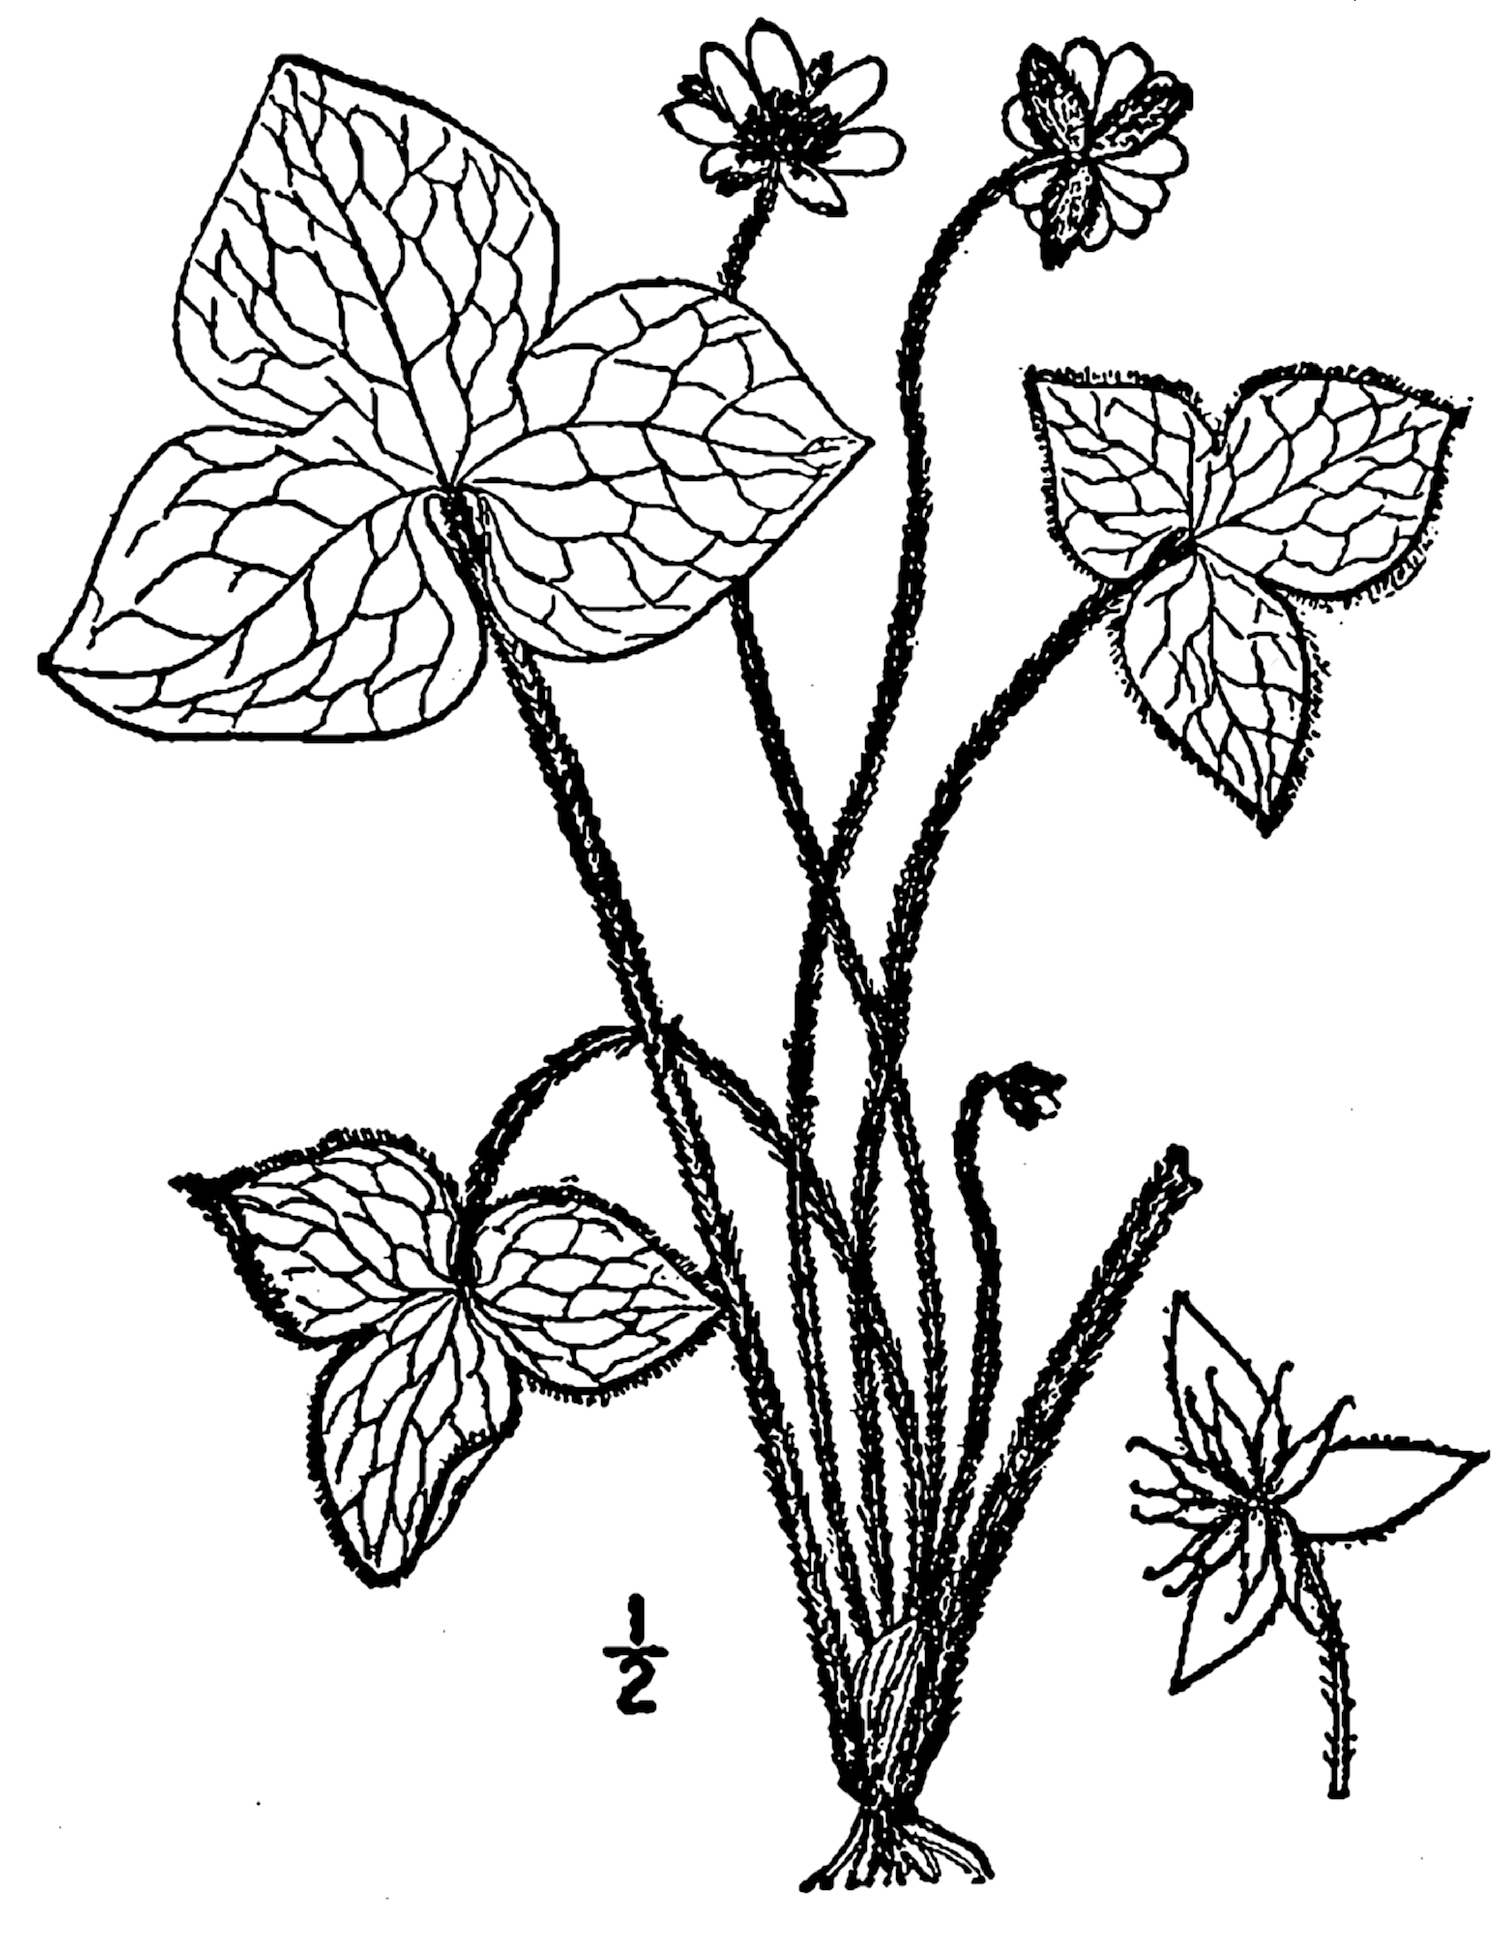 1913 Hepatica acutiloba illustration.